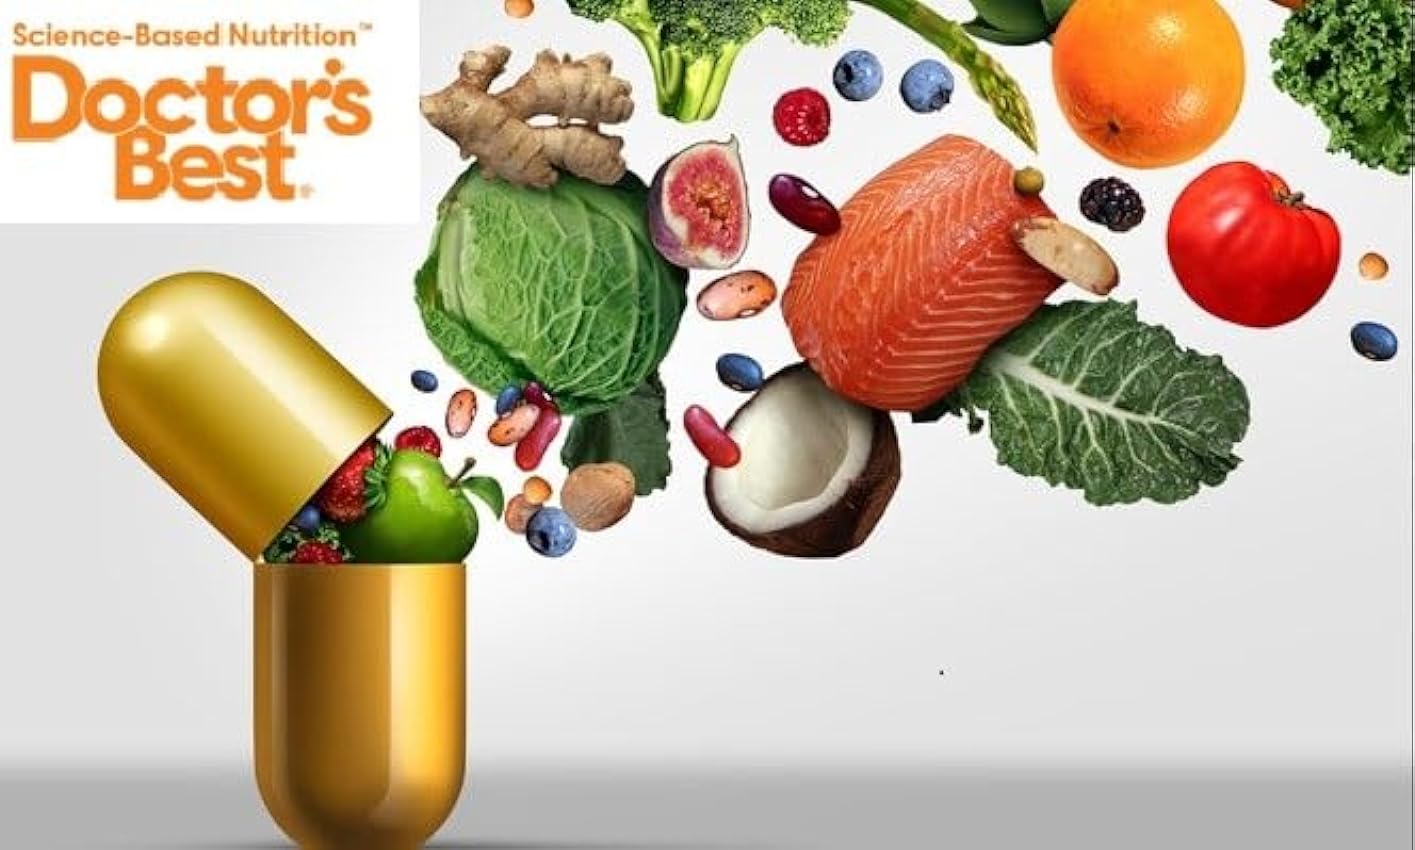 Doctor´s Best Luteína y Zeaxantina, Mango Madness - 60 gomitas - Salud Ocular y Antioxidante mK8LmxT9